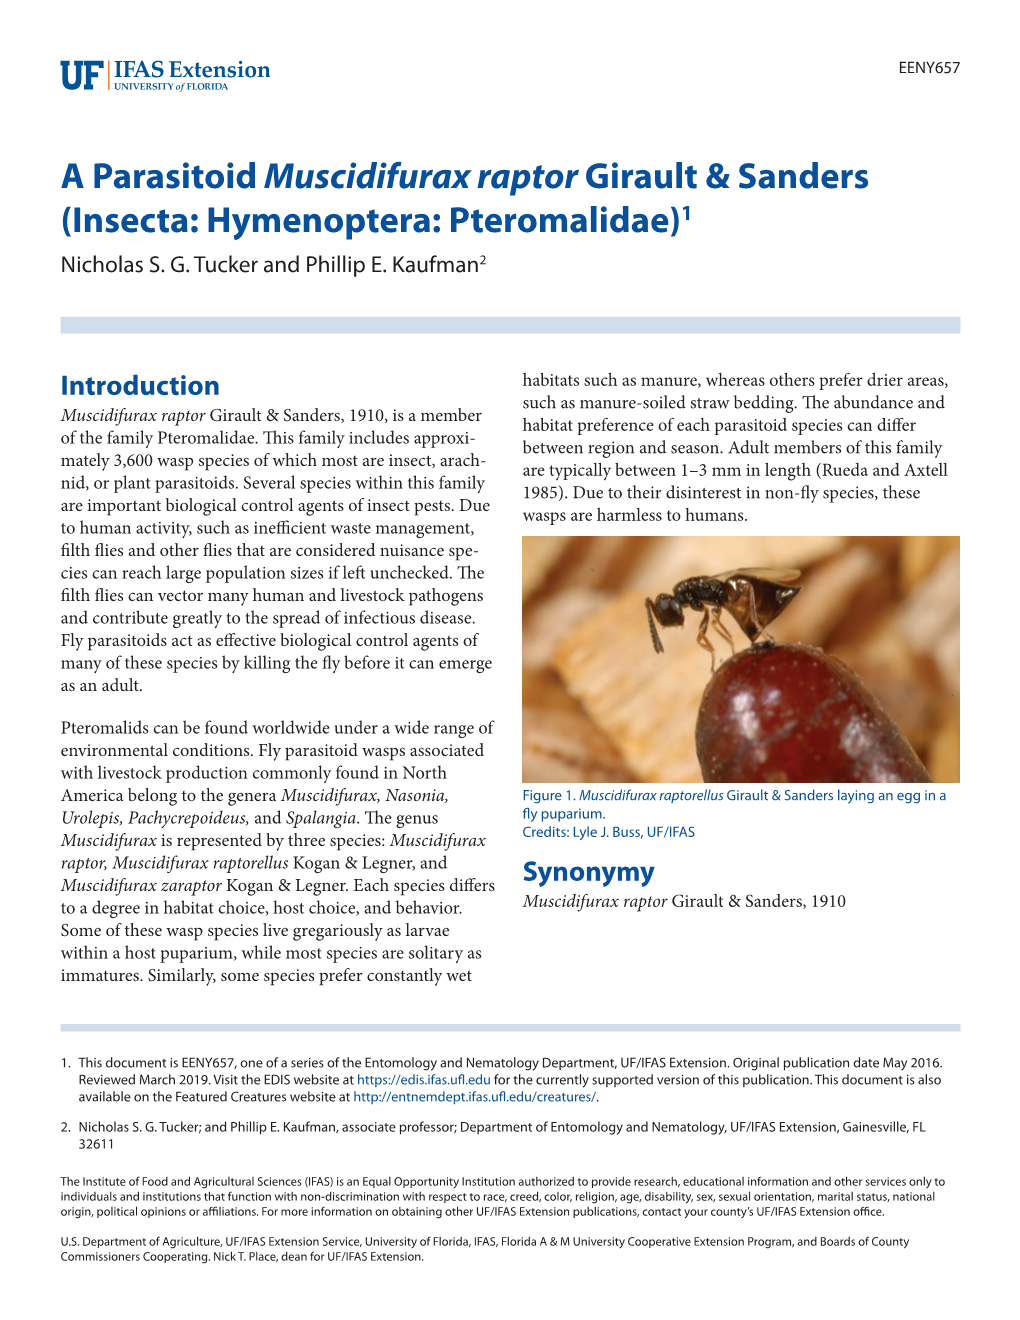 A Parasitoidmuscidifurax Raptor Girault & Sanders (Insecta